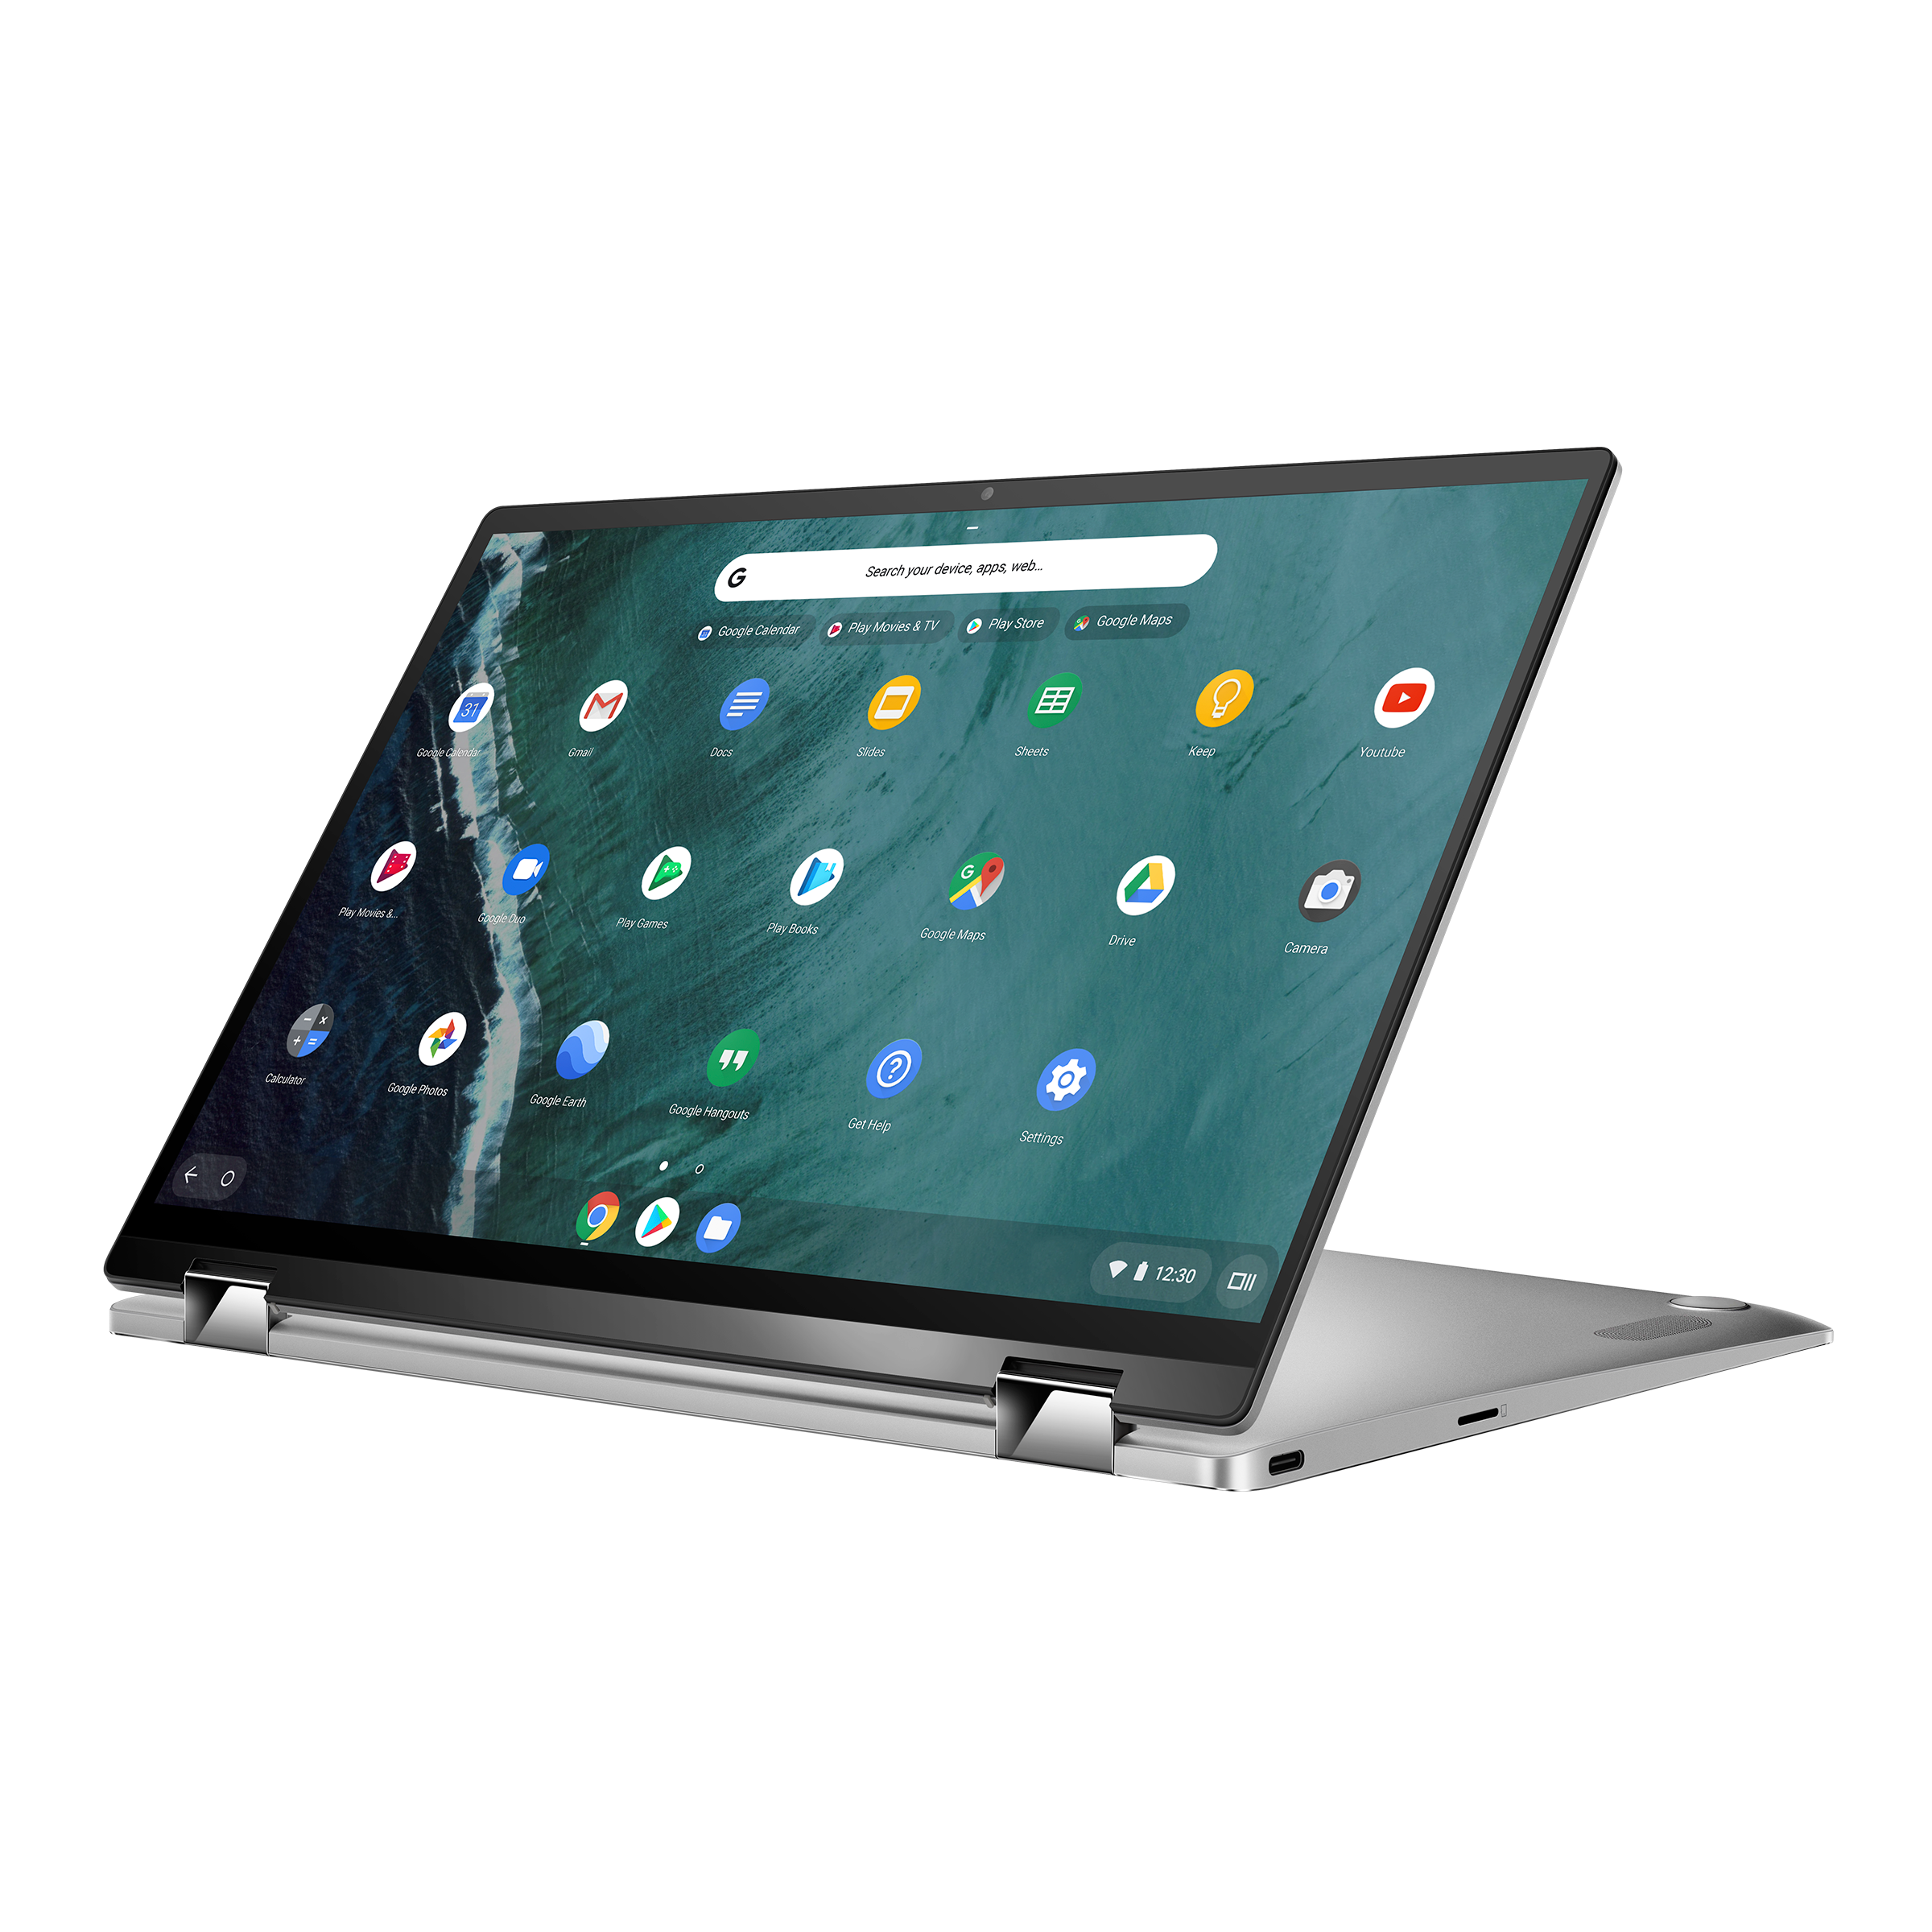 ASUS Chromebook Flip C434｜Laptops For Home｜ASUS Global